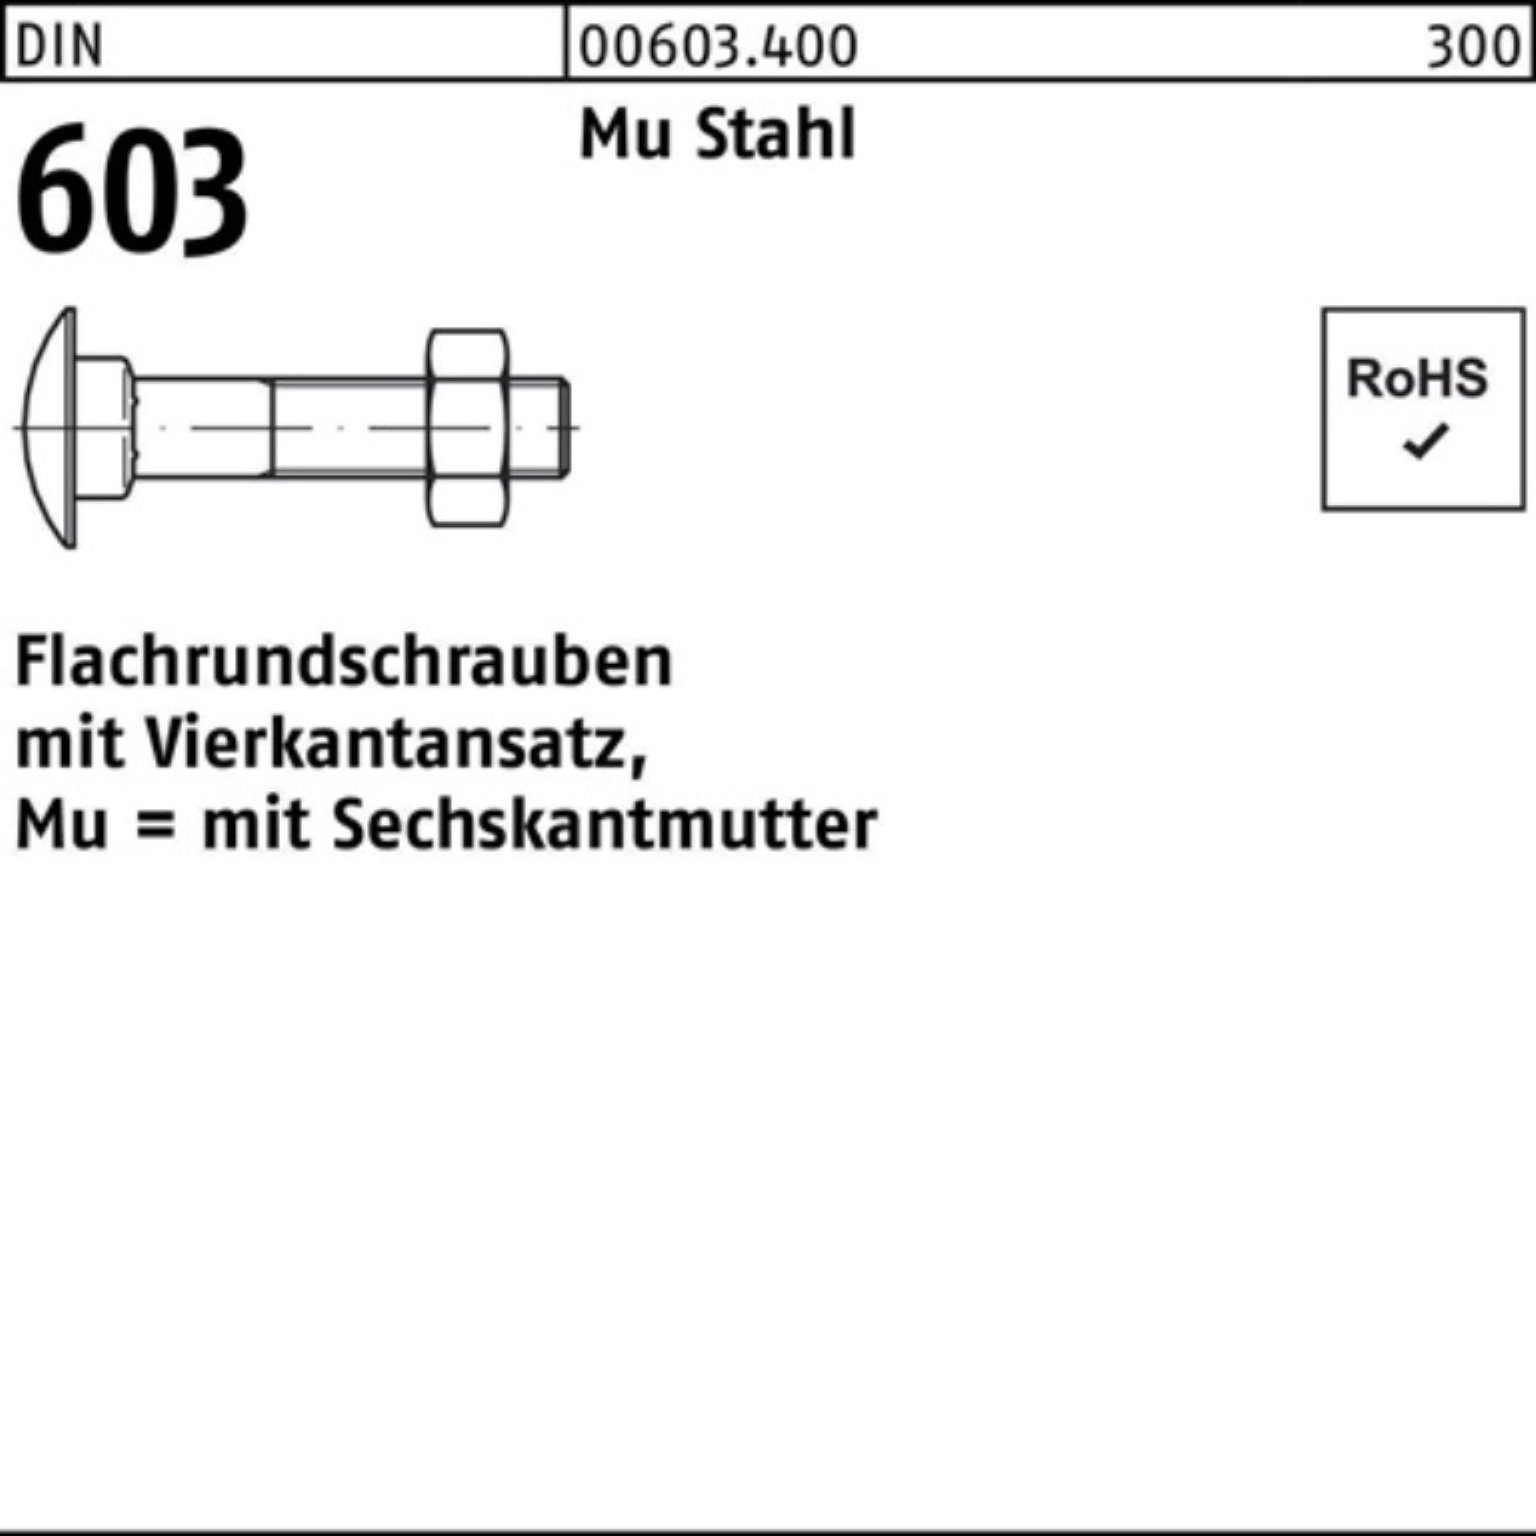 Schraube 100er 603 M16x45 Pack Vierkantansatz/6-ktmutter Flachrundschraube DIN Reyher